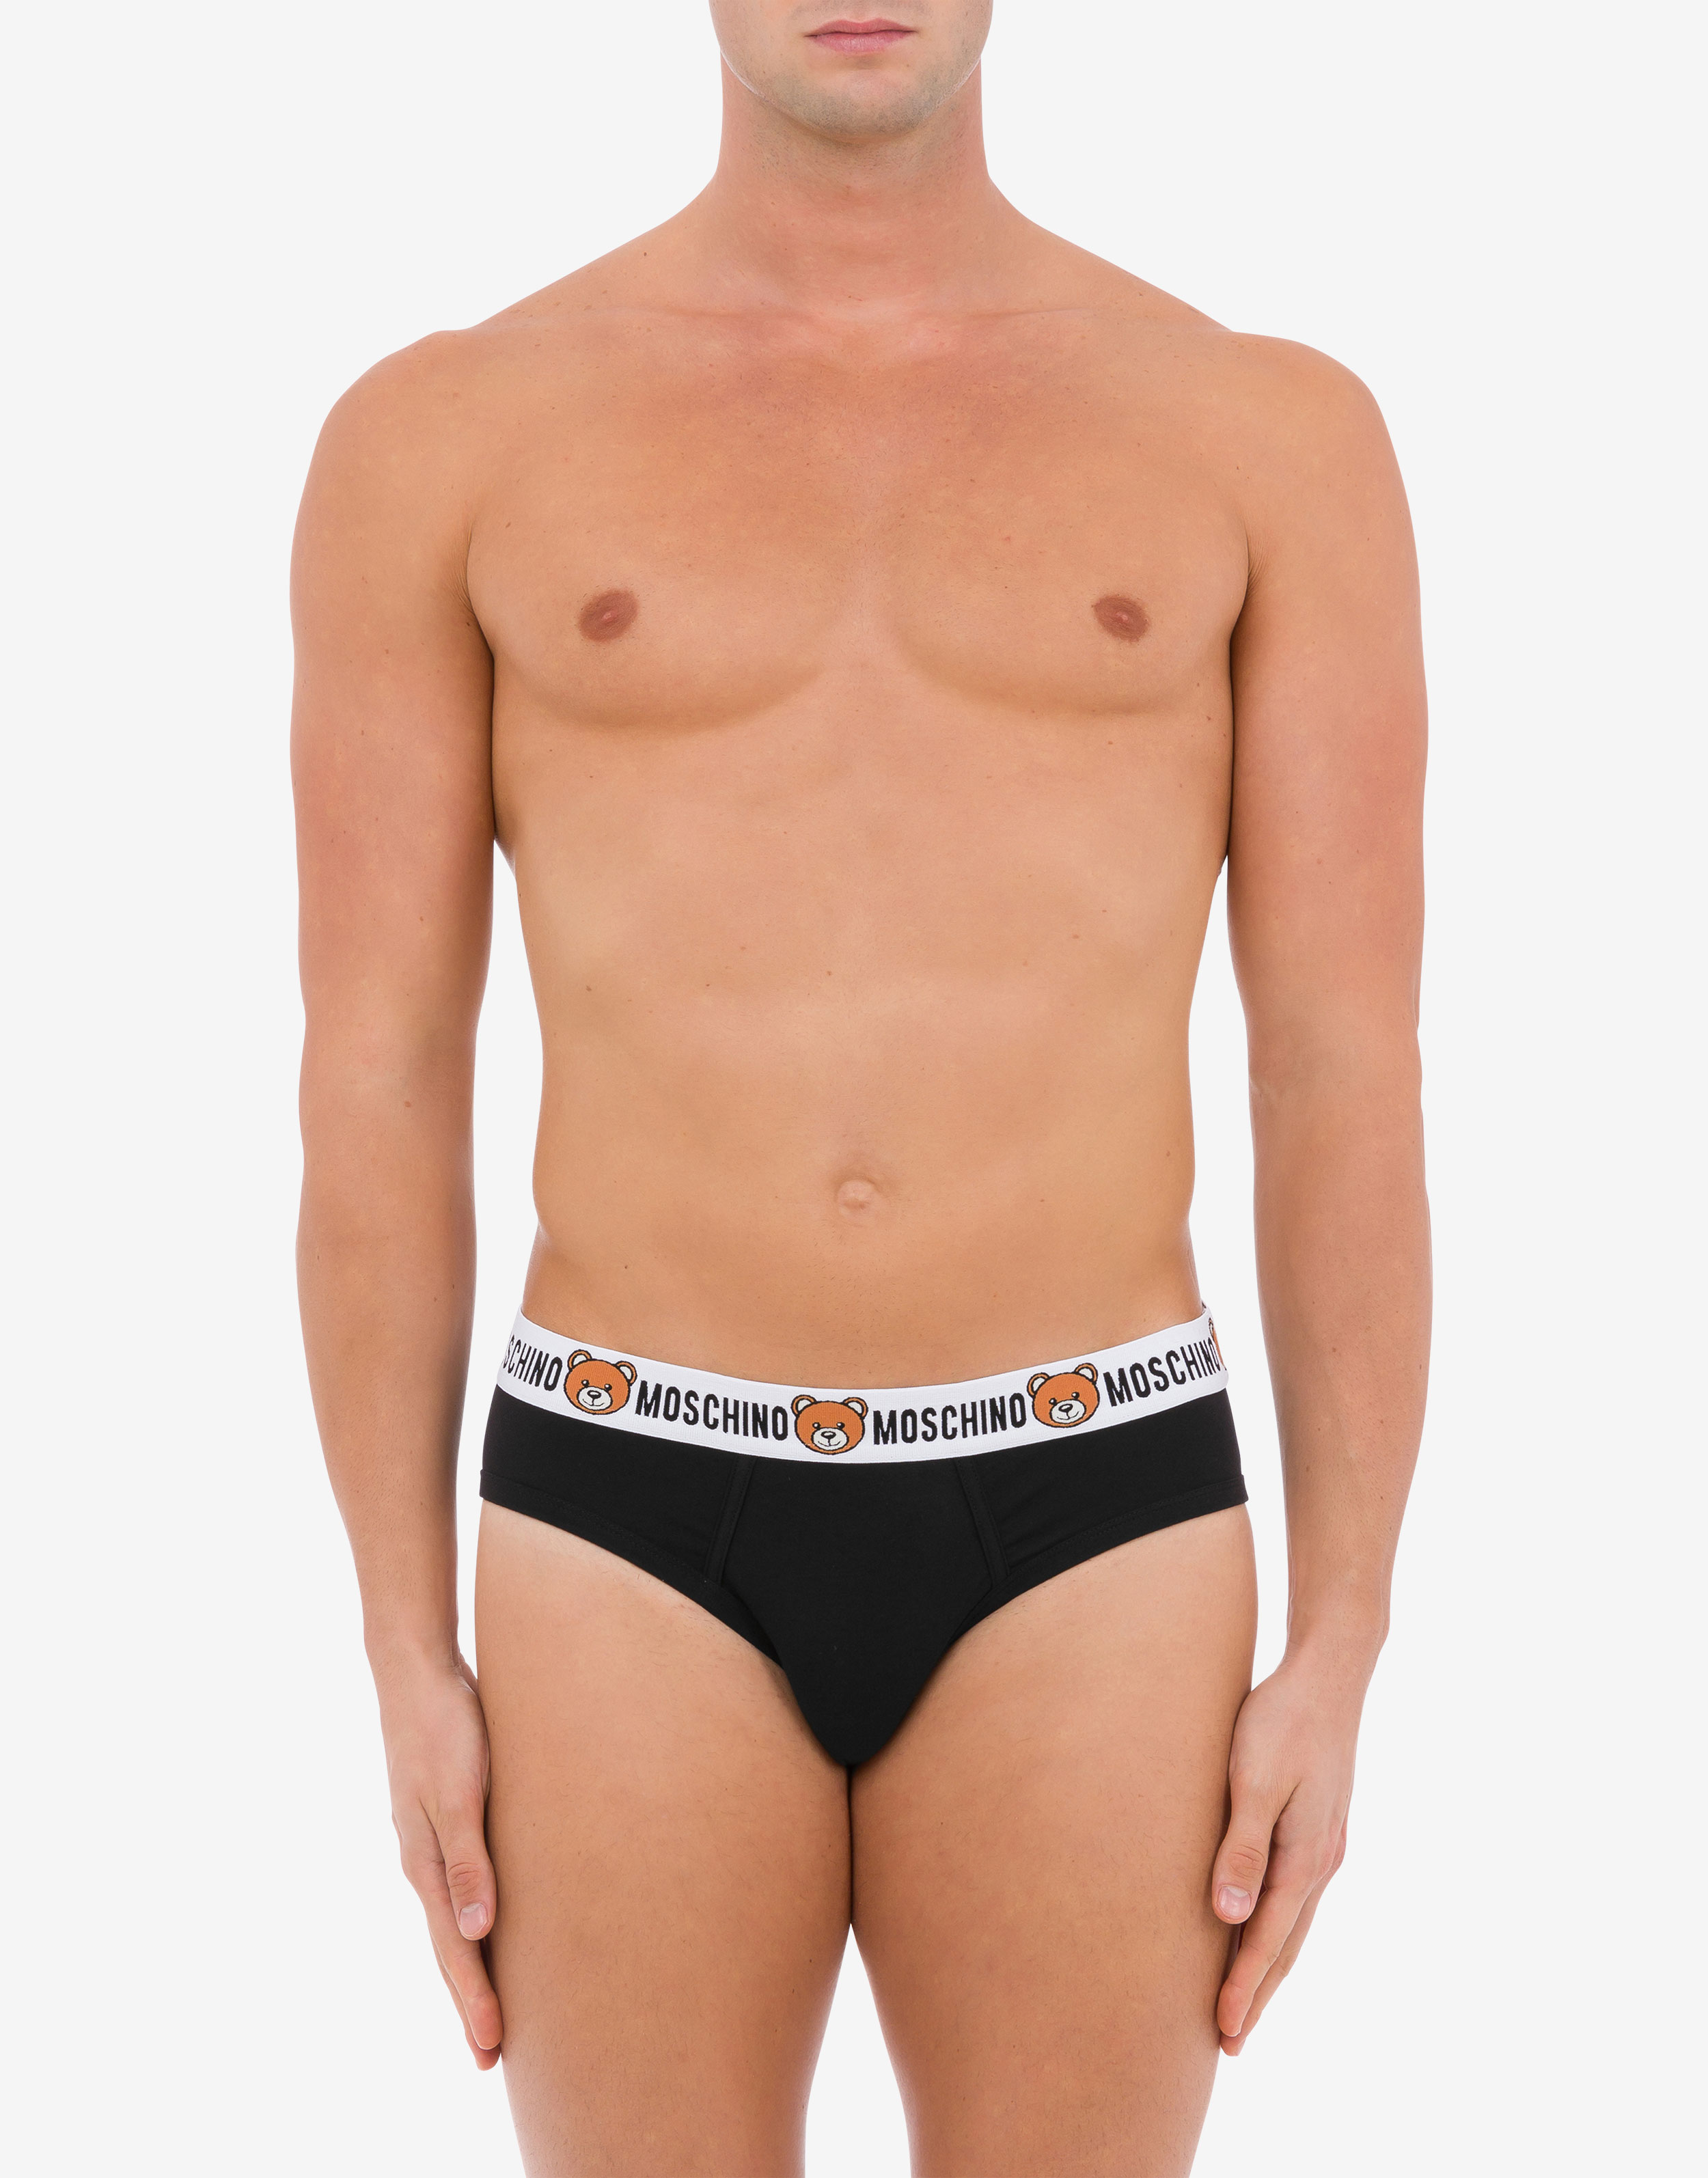 Moschino Underwear - Boxer for Man - White - 322V1A139543005555